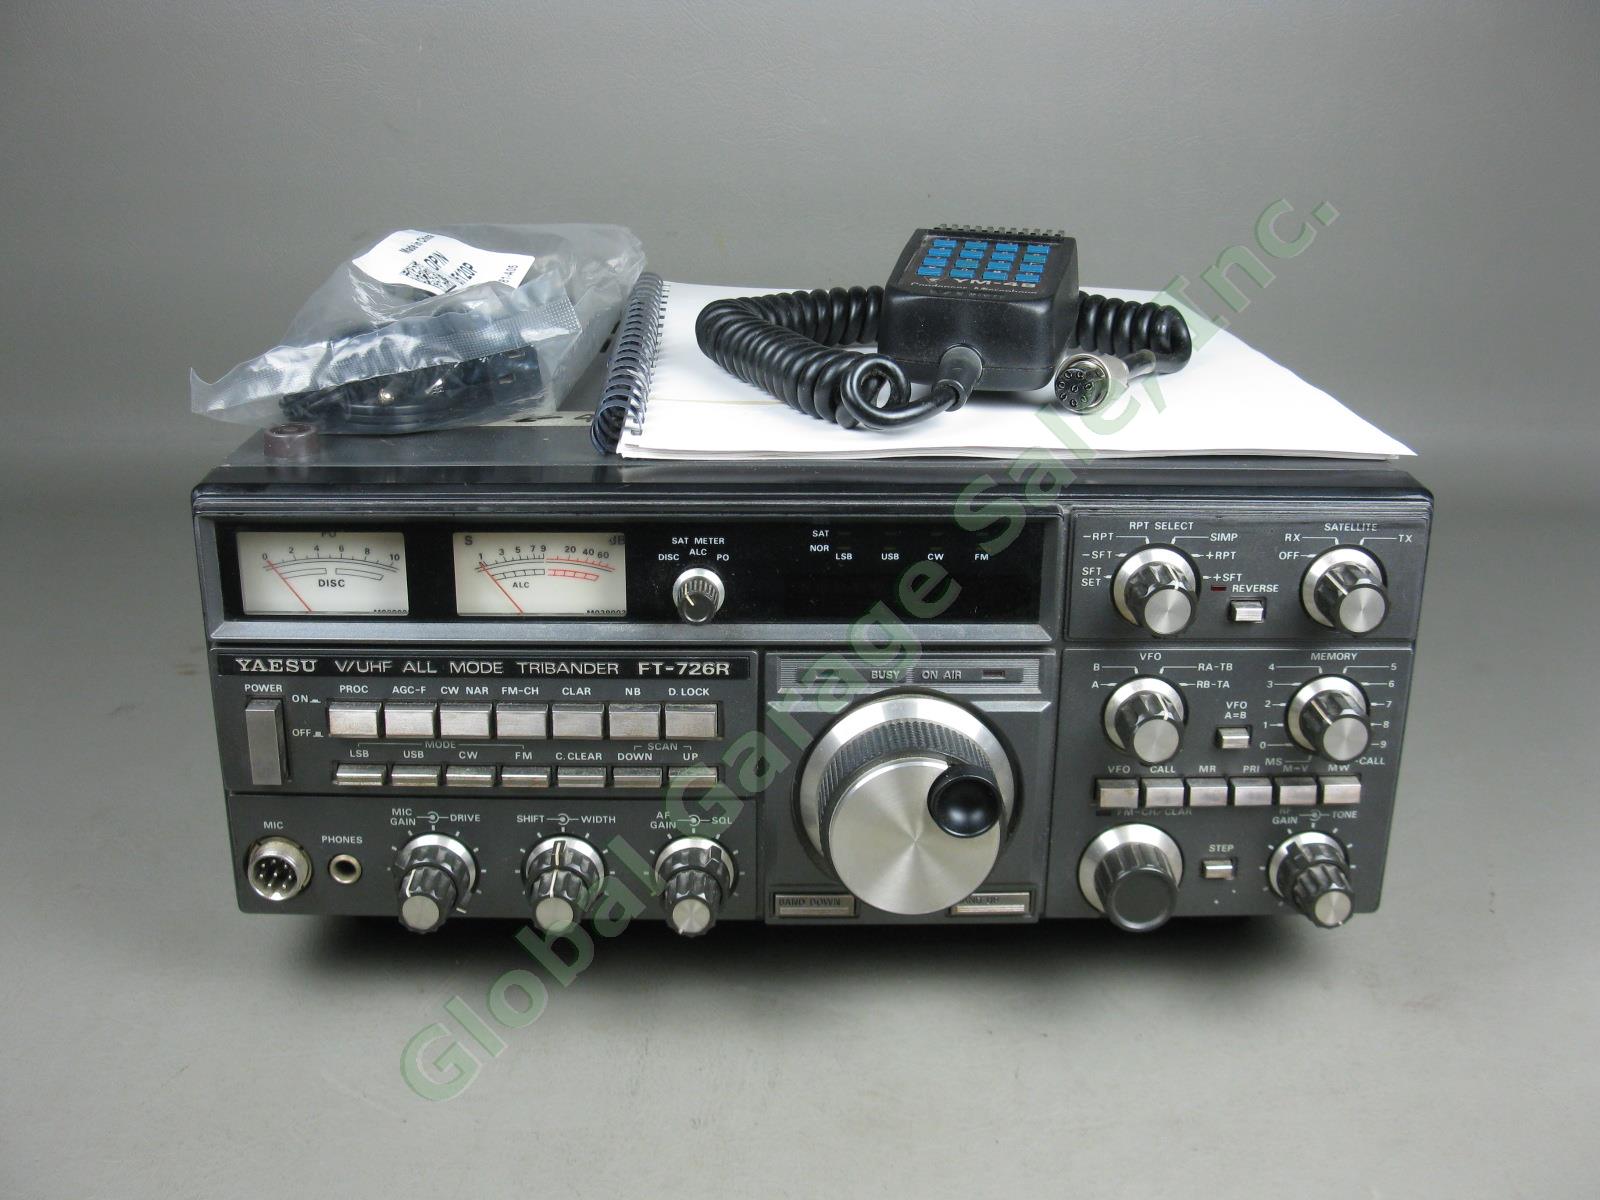 Yaesu FT-726R V/UHF All Mode Tribander Ham Radio Transceiver + YM-48 Mic Tested+